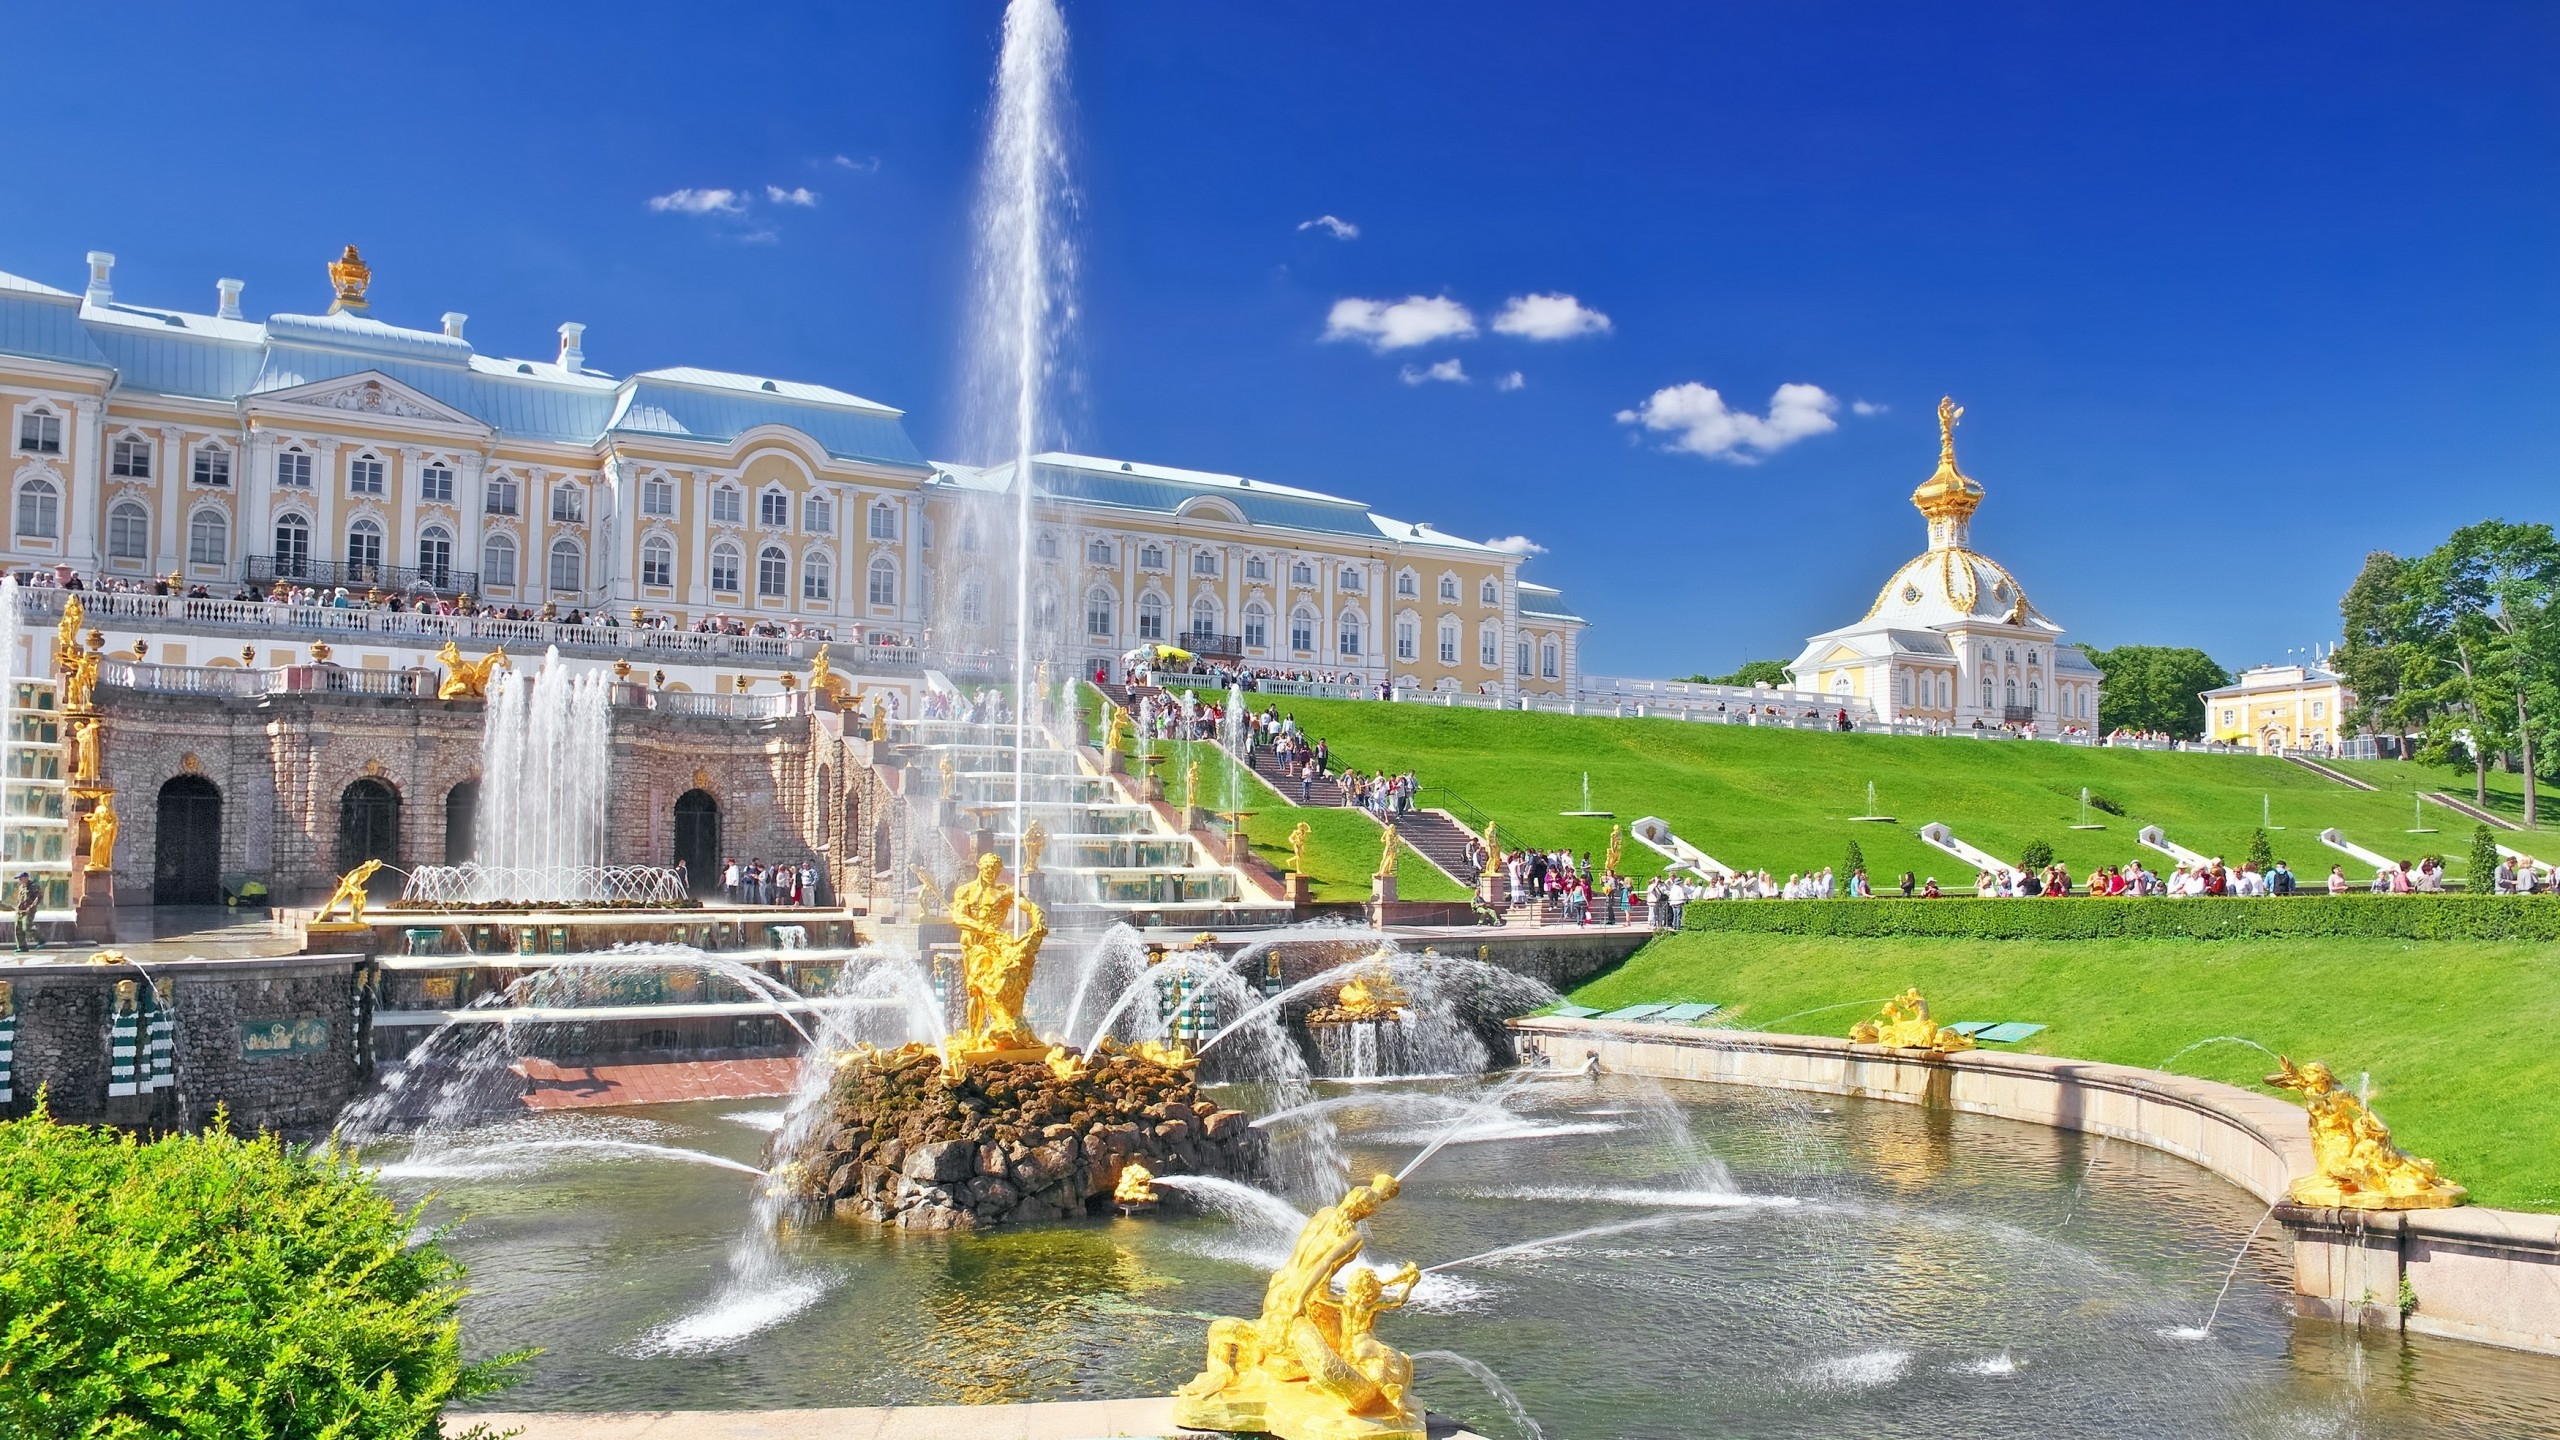 Peterhof Palace Fountain for 2560x1440 HDTV resolution